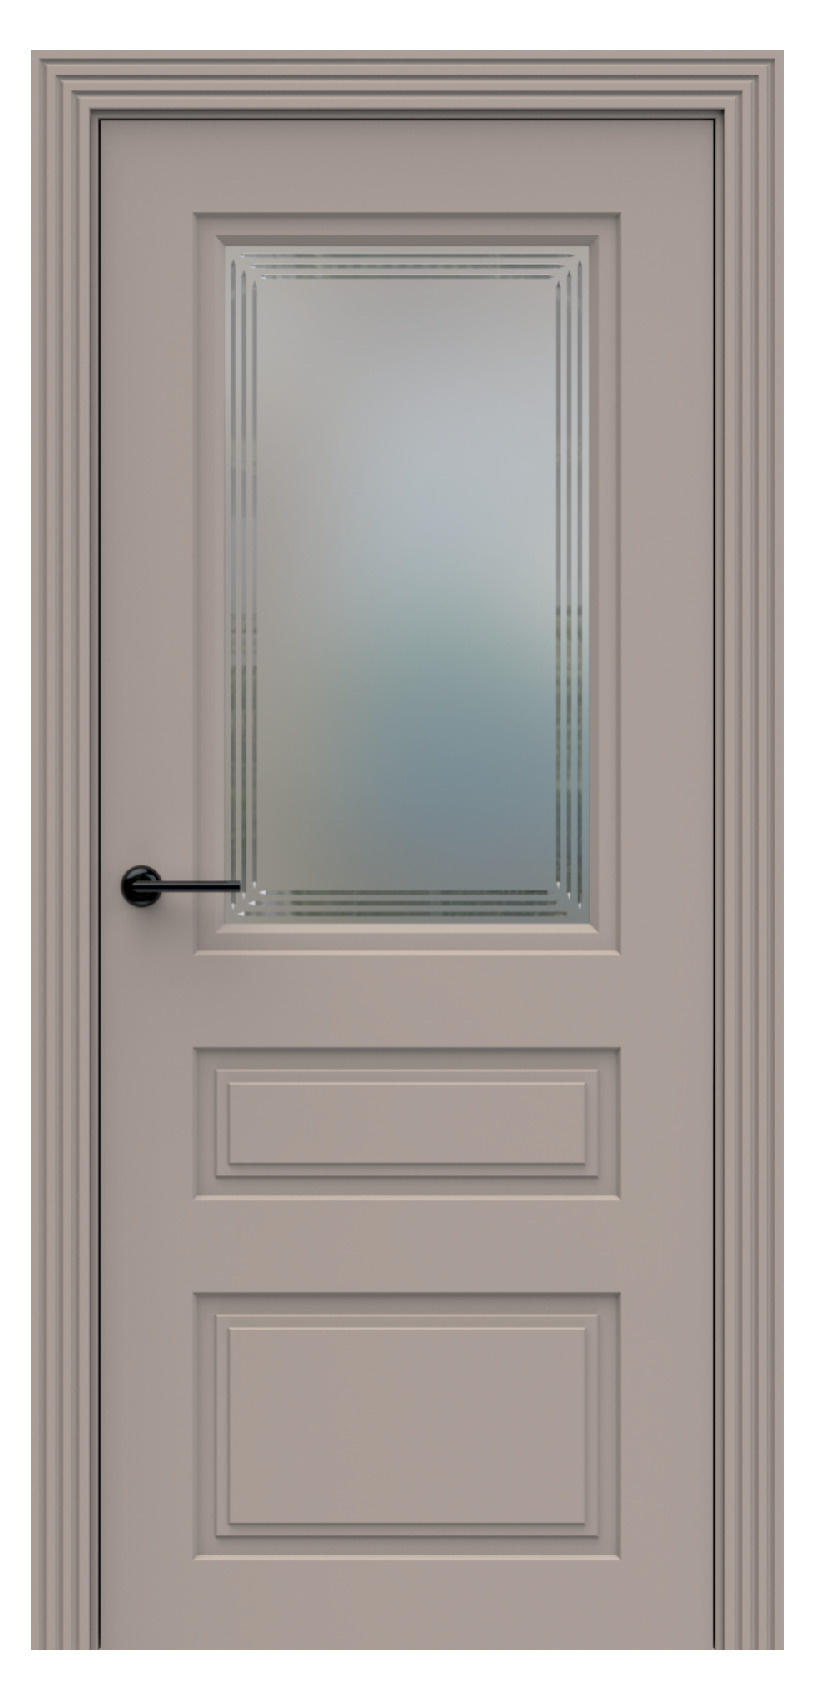 Questdoors Межкомнатная дверь QI5, арт. 17966 - фото №1